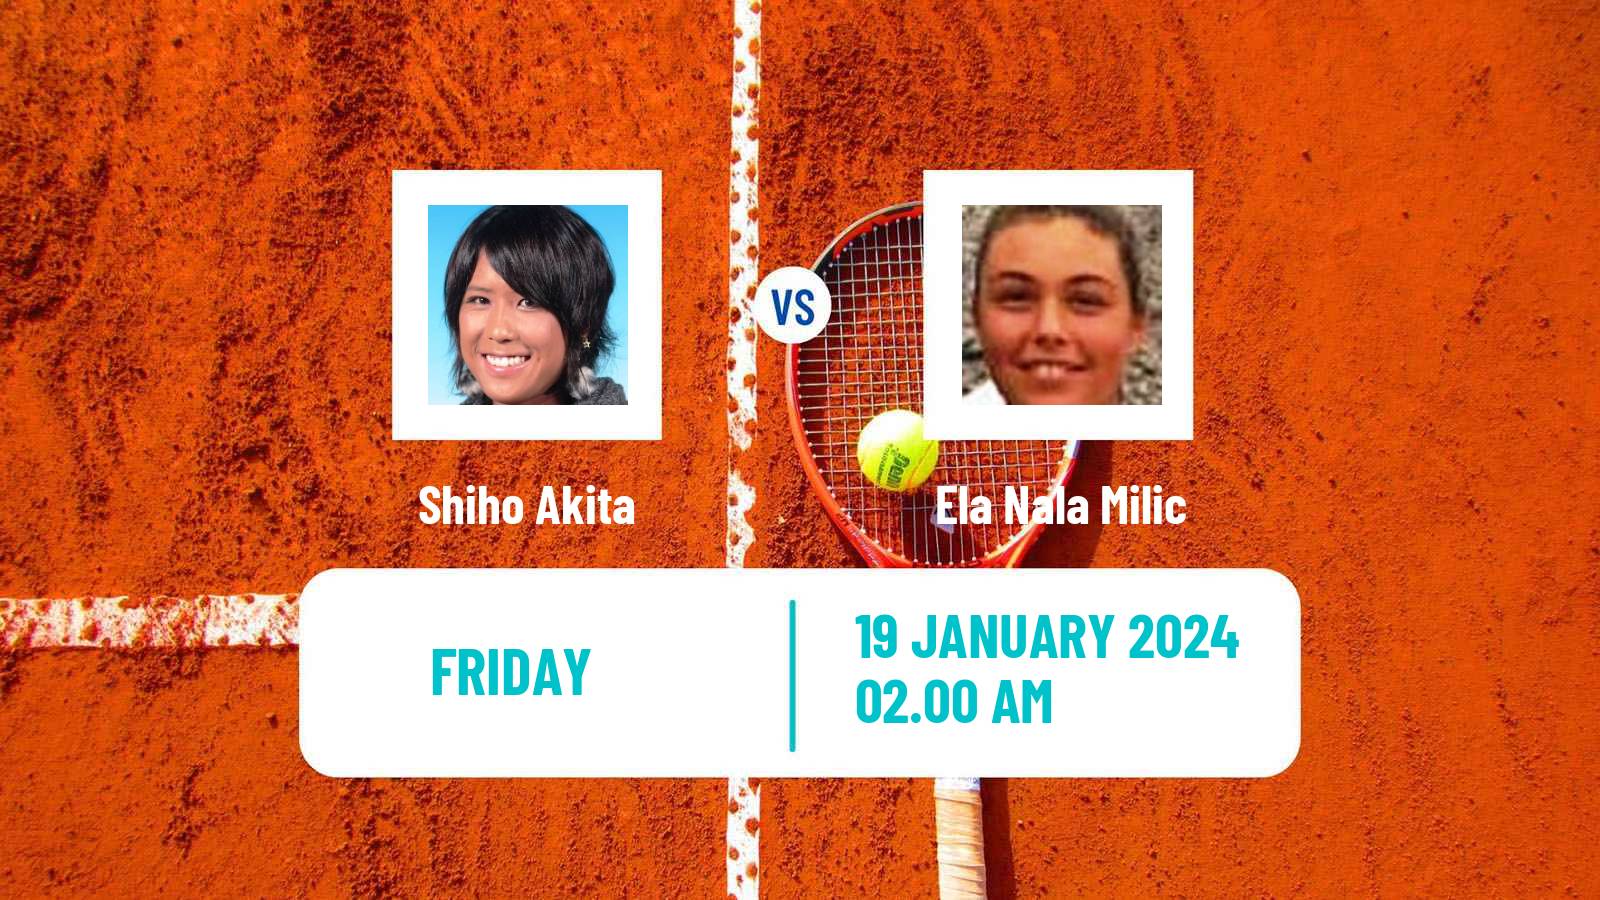 Tennis ITF W50 Antalya Women Shiho Akita - Ela Nala Milic